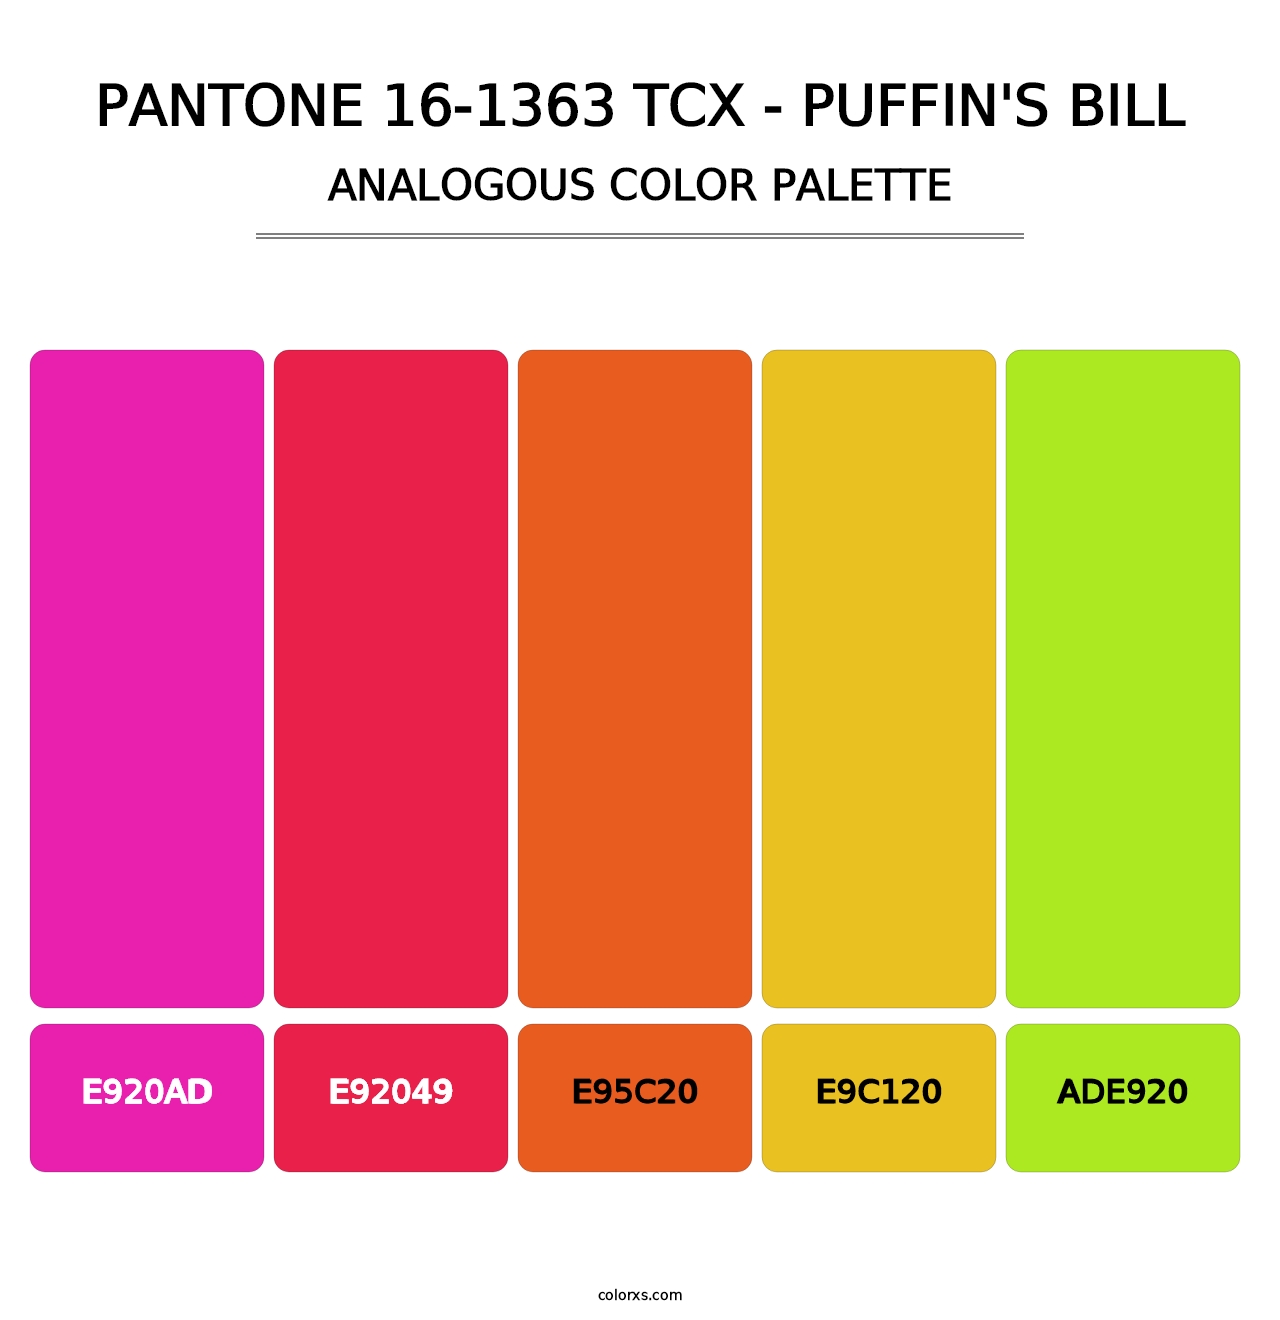 PANTONE 16-1363 TCX - Puffin's Bill - Analogous Color Palette